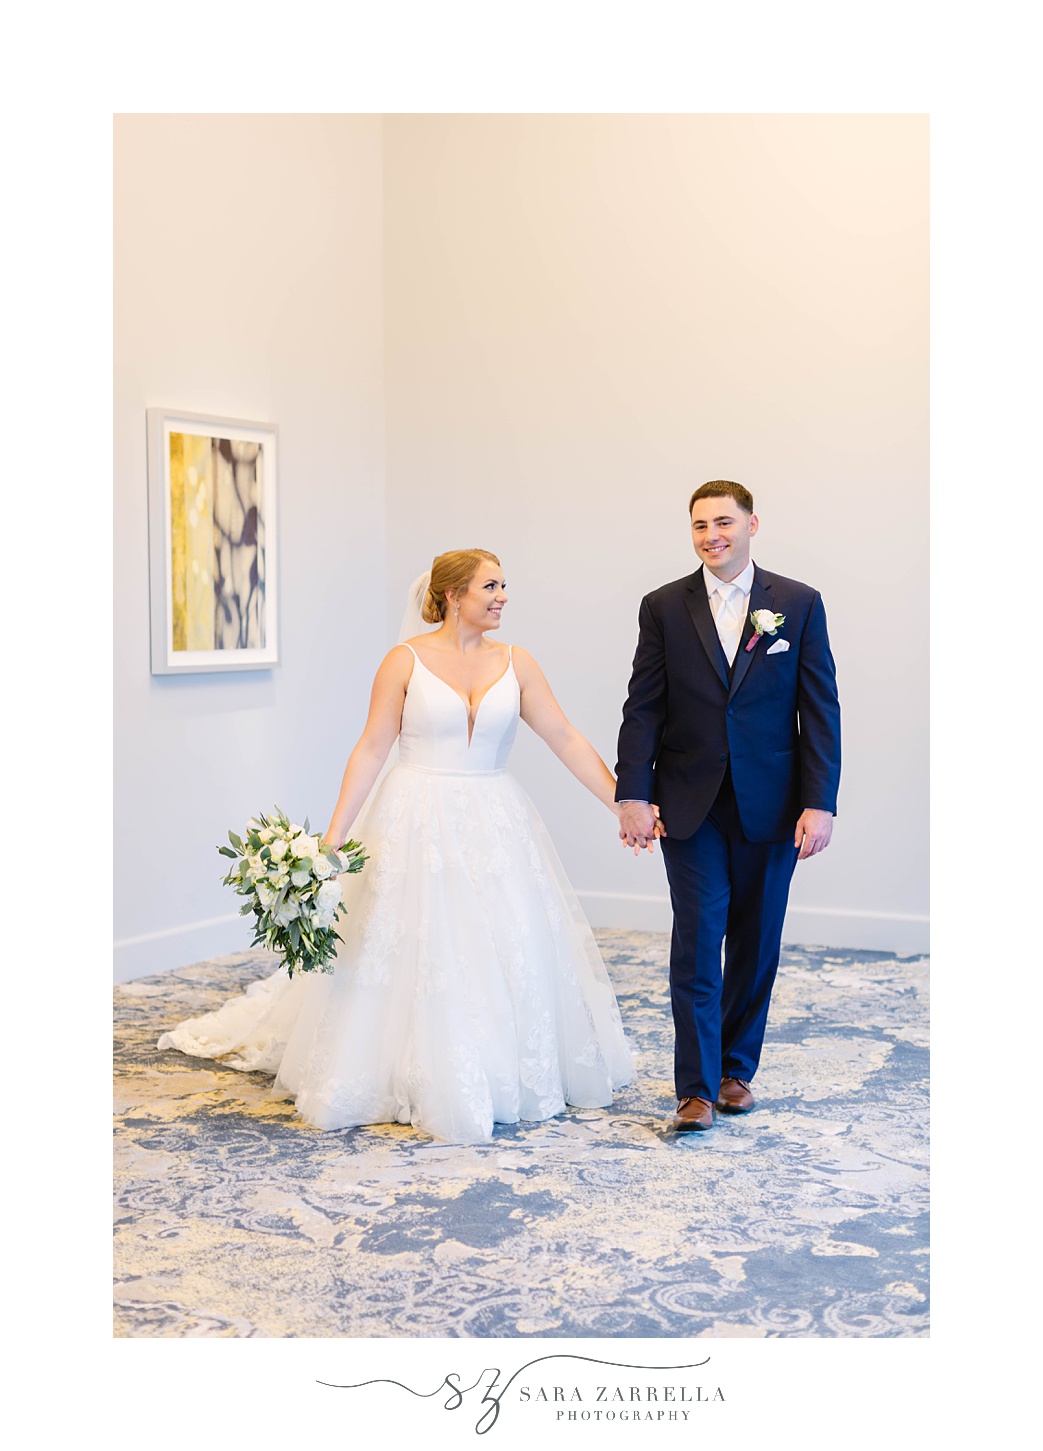 newlyweds walk together during Rhode Island wedding photos